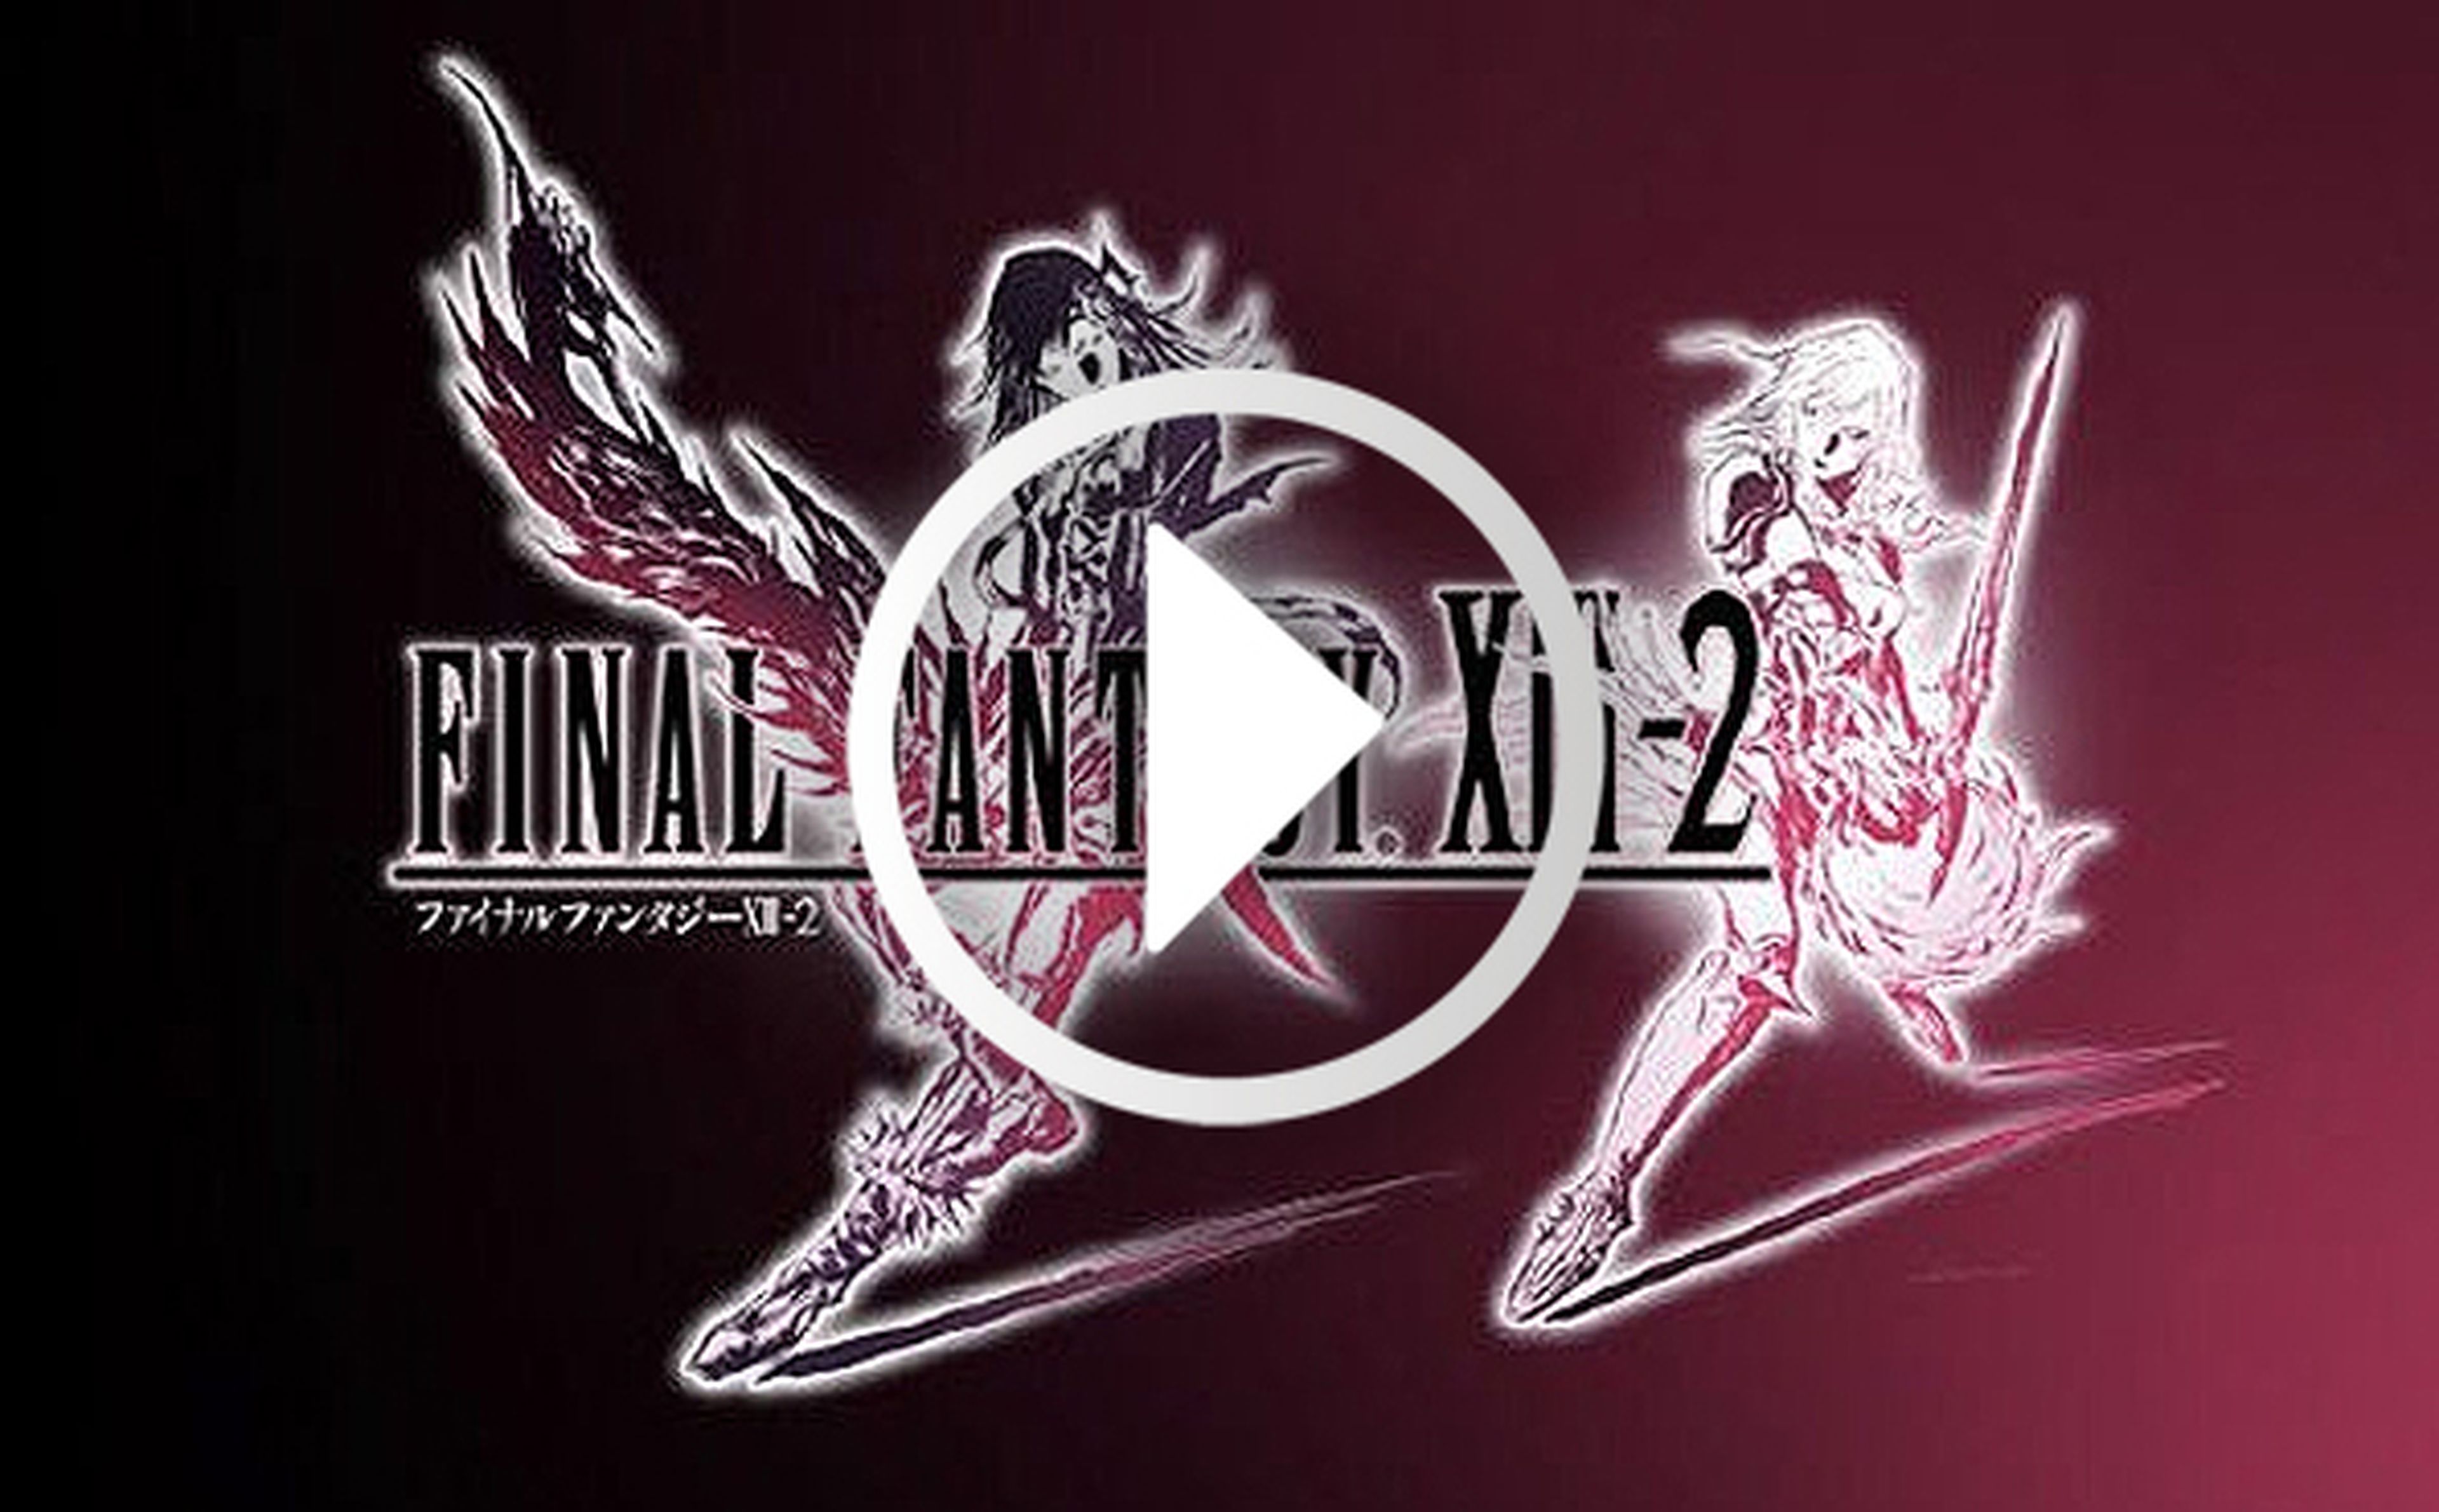 Primer tráiler de Final Fantasy XIII-2